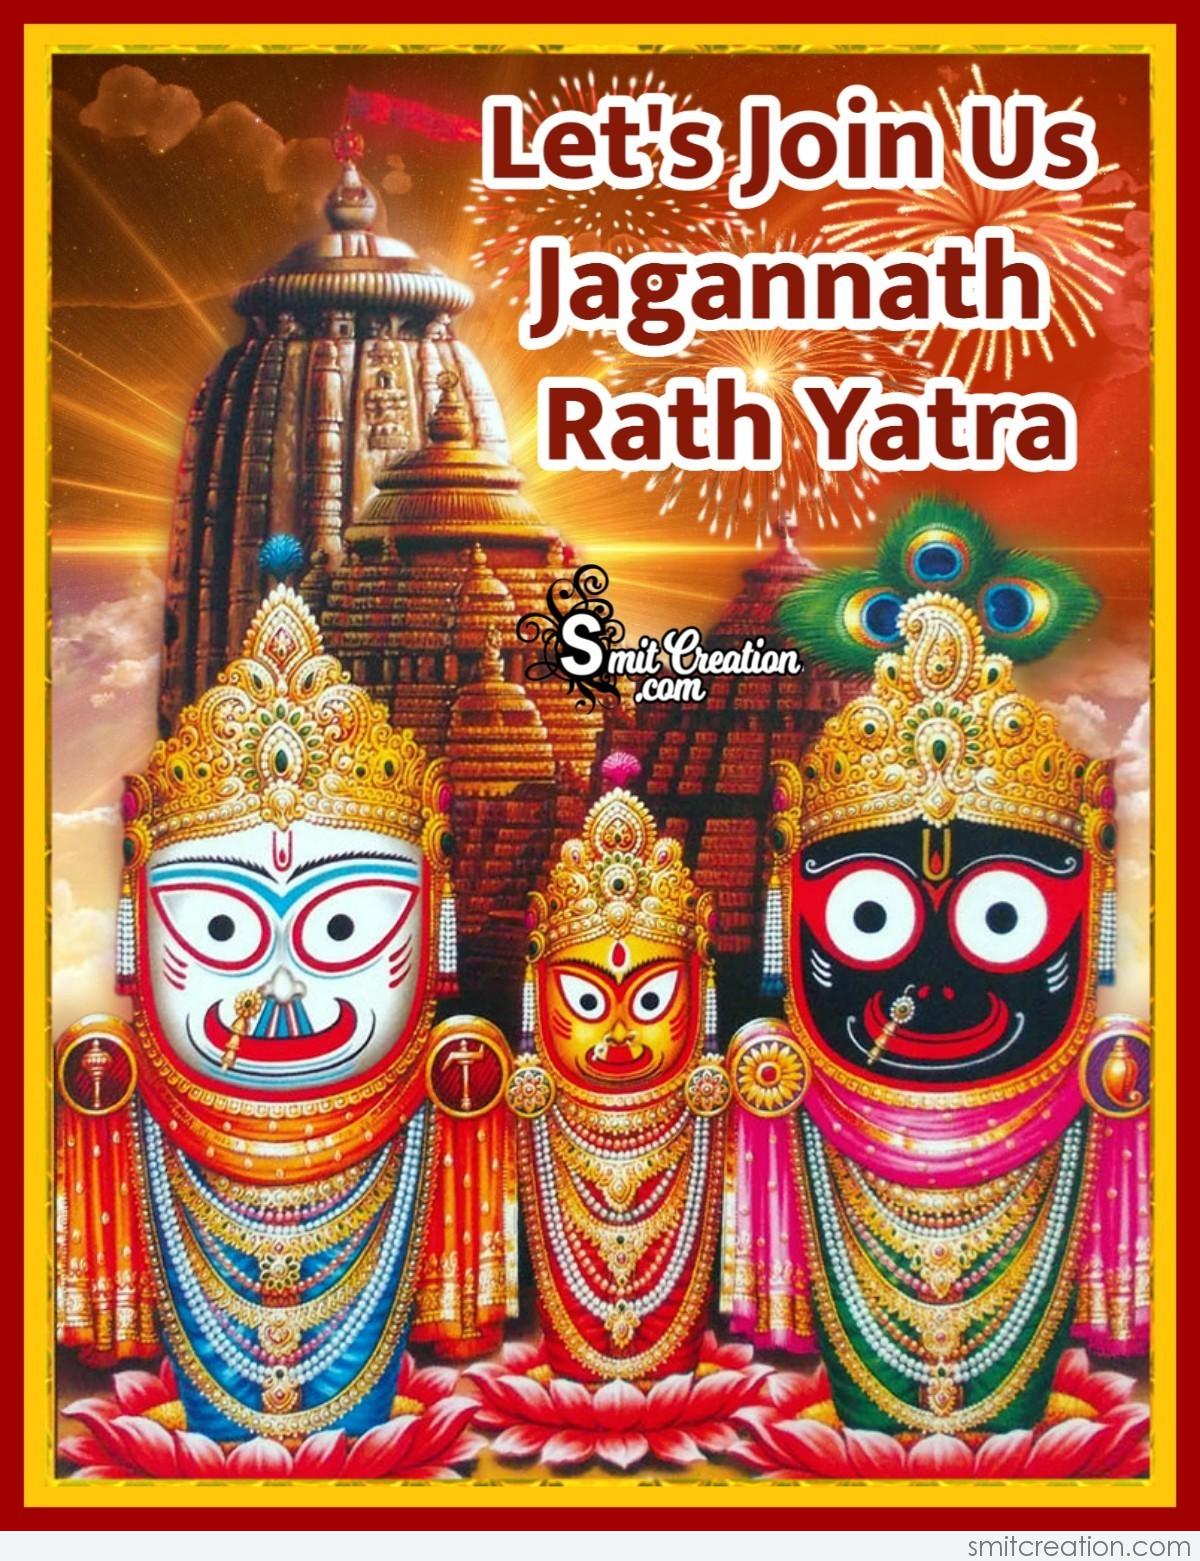 Let's Join Us Jagannath Rath Yatra - SmitCreation.com